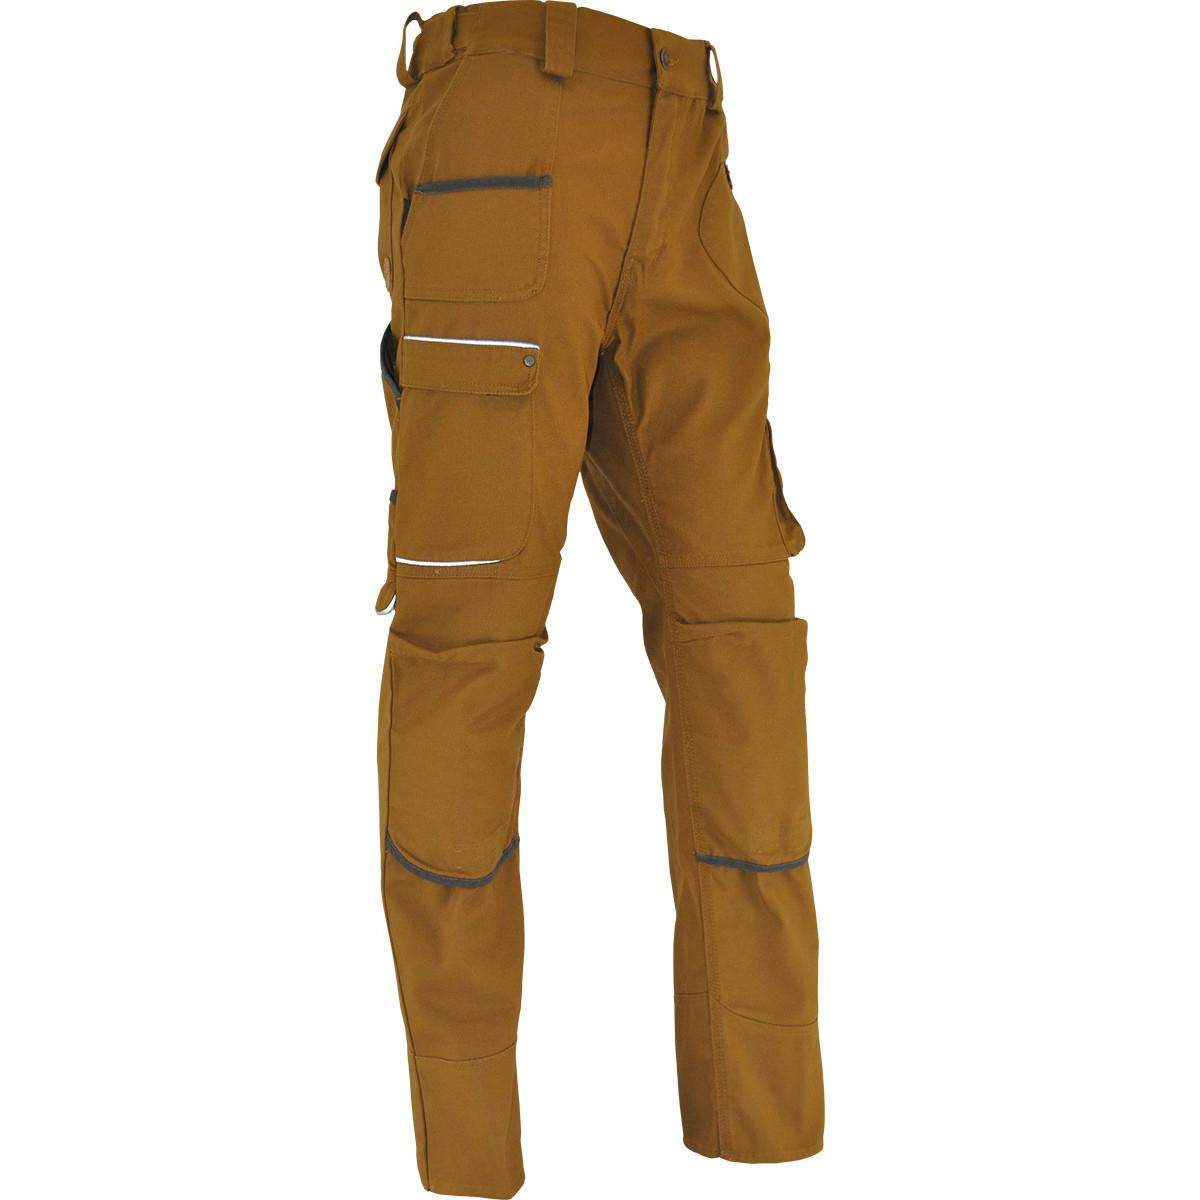 Pantalon chantier SAHARA Taille 42 , poches multiples, genouillères incluses, bronze